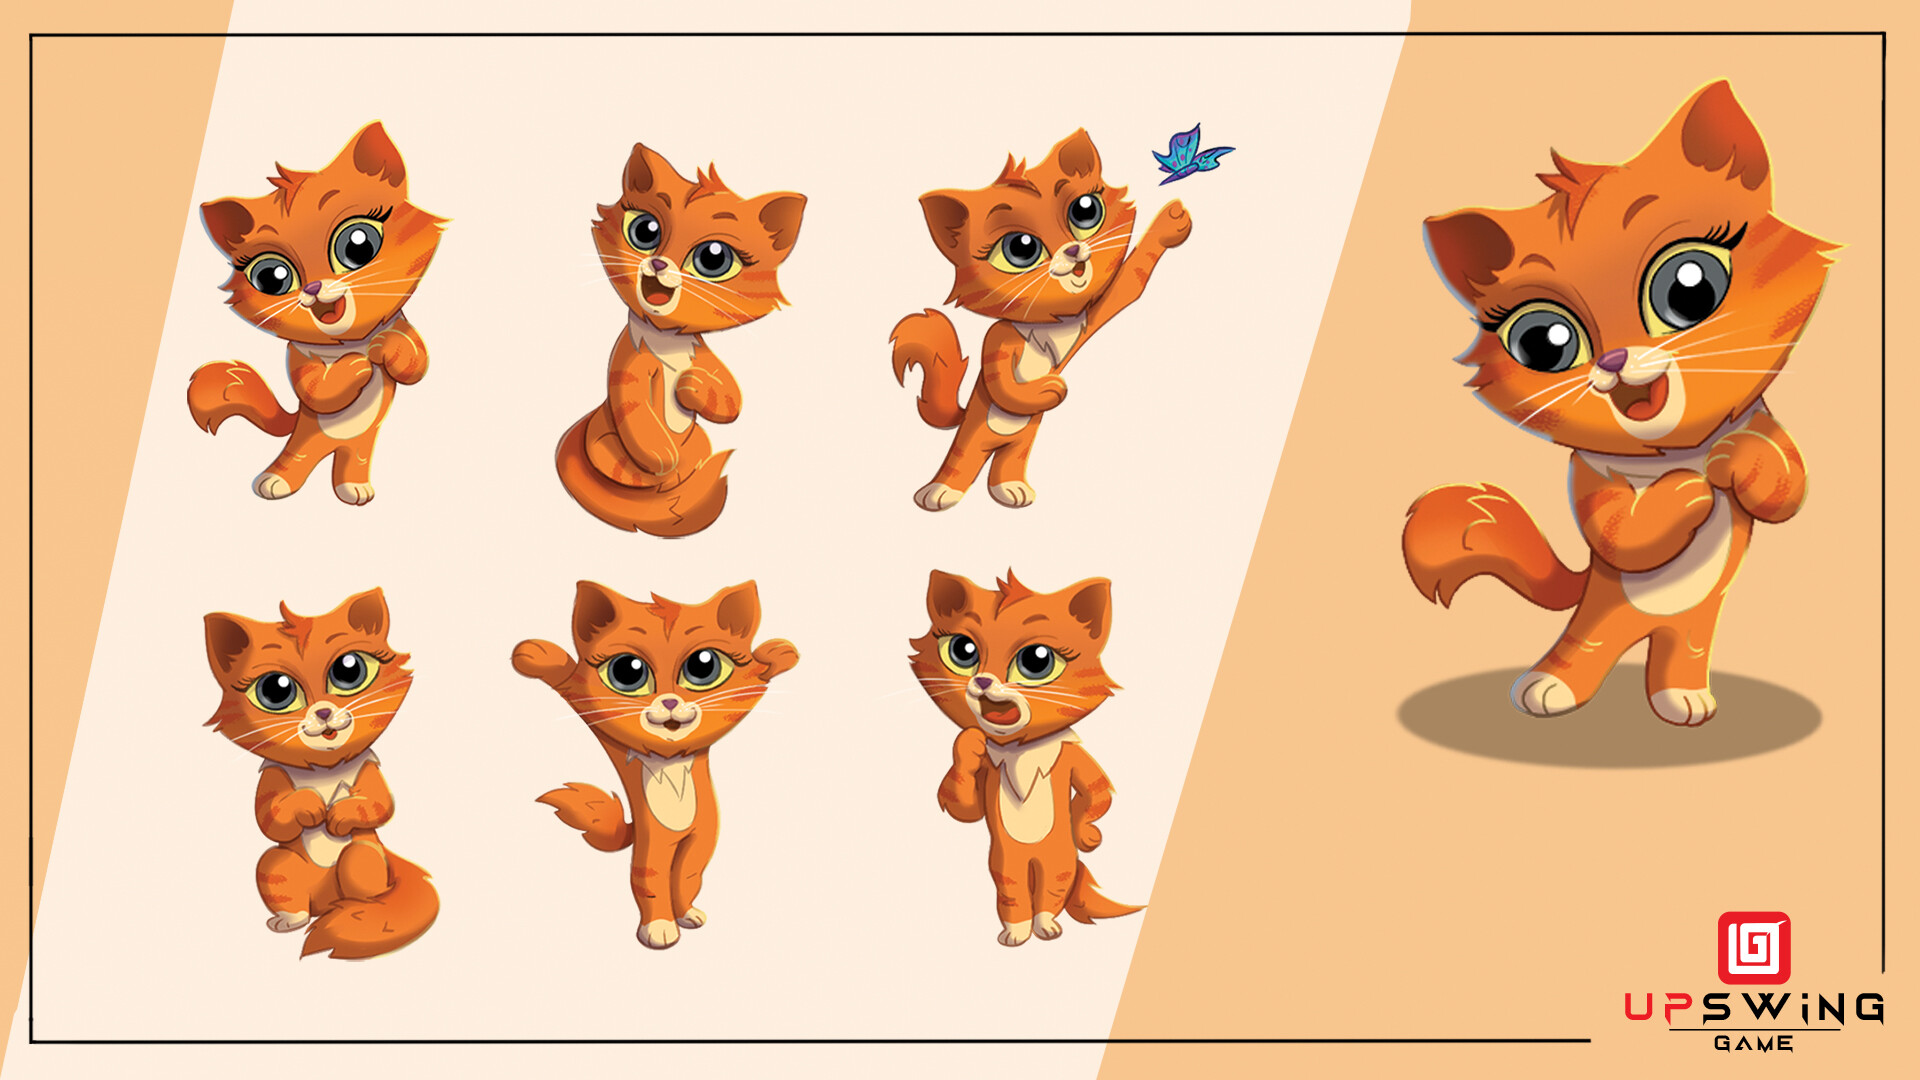 ArtStation - Cat Game - Character Design